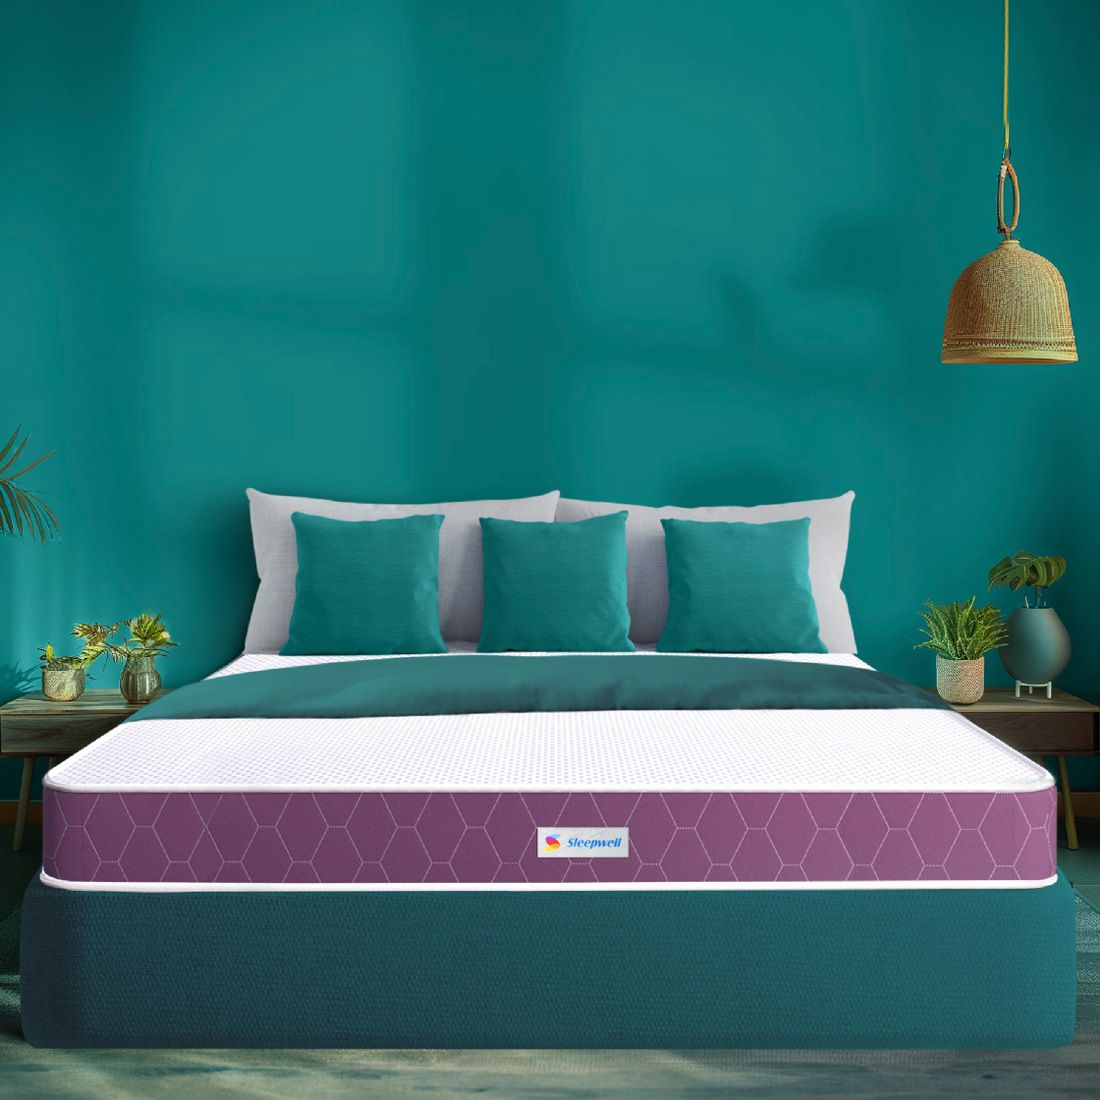 Sleepwell Ortho Mattress | Quilted | 6-inch King Bed Size, Impressions Memory Foam, Medium Firm Mattress(Purple, 84x70X6)